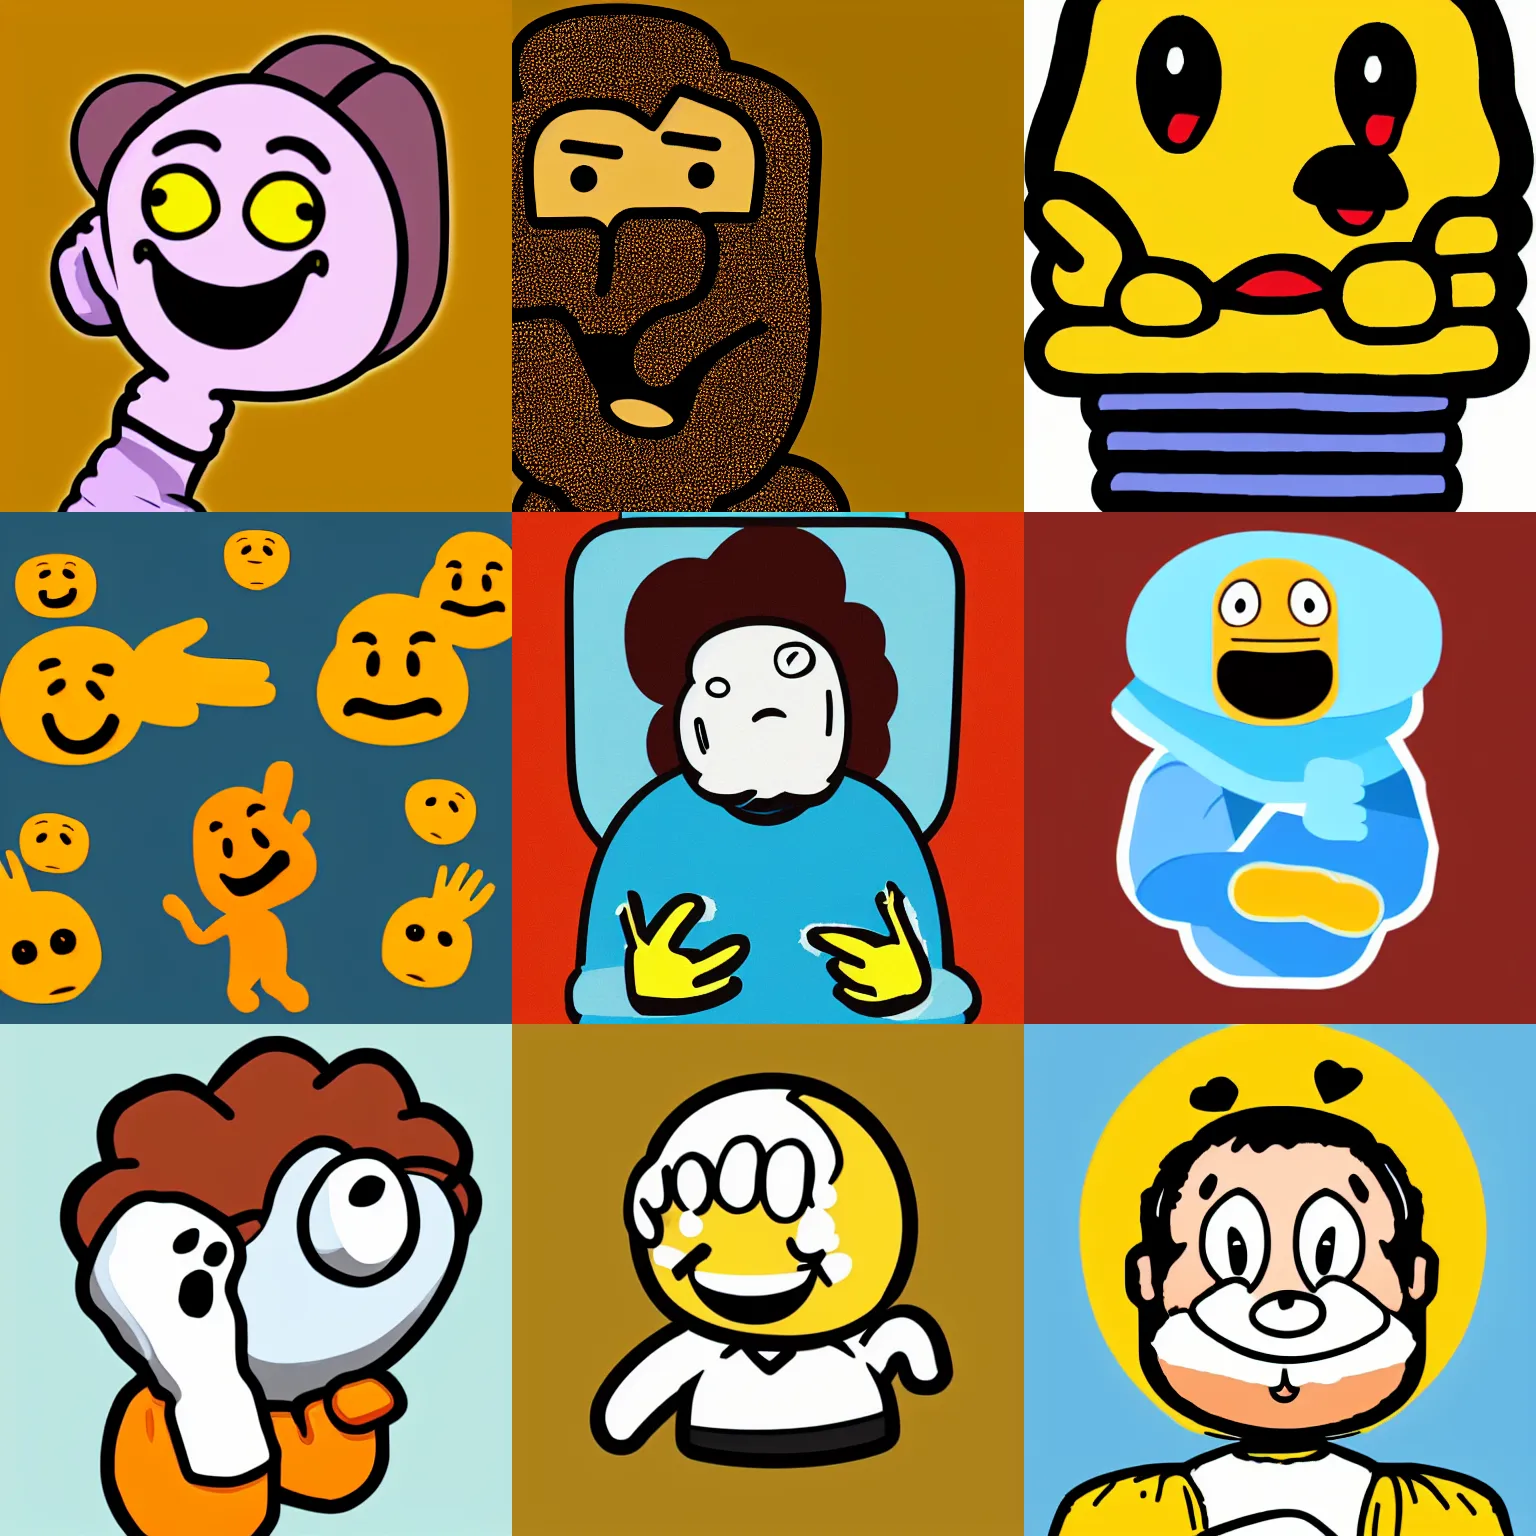 Prompt: cartoon portrait of poo emoji, with gloved hands